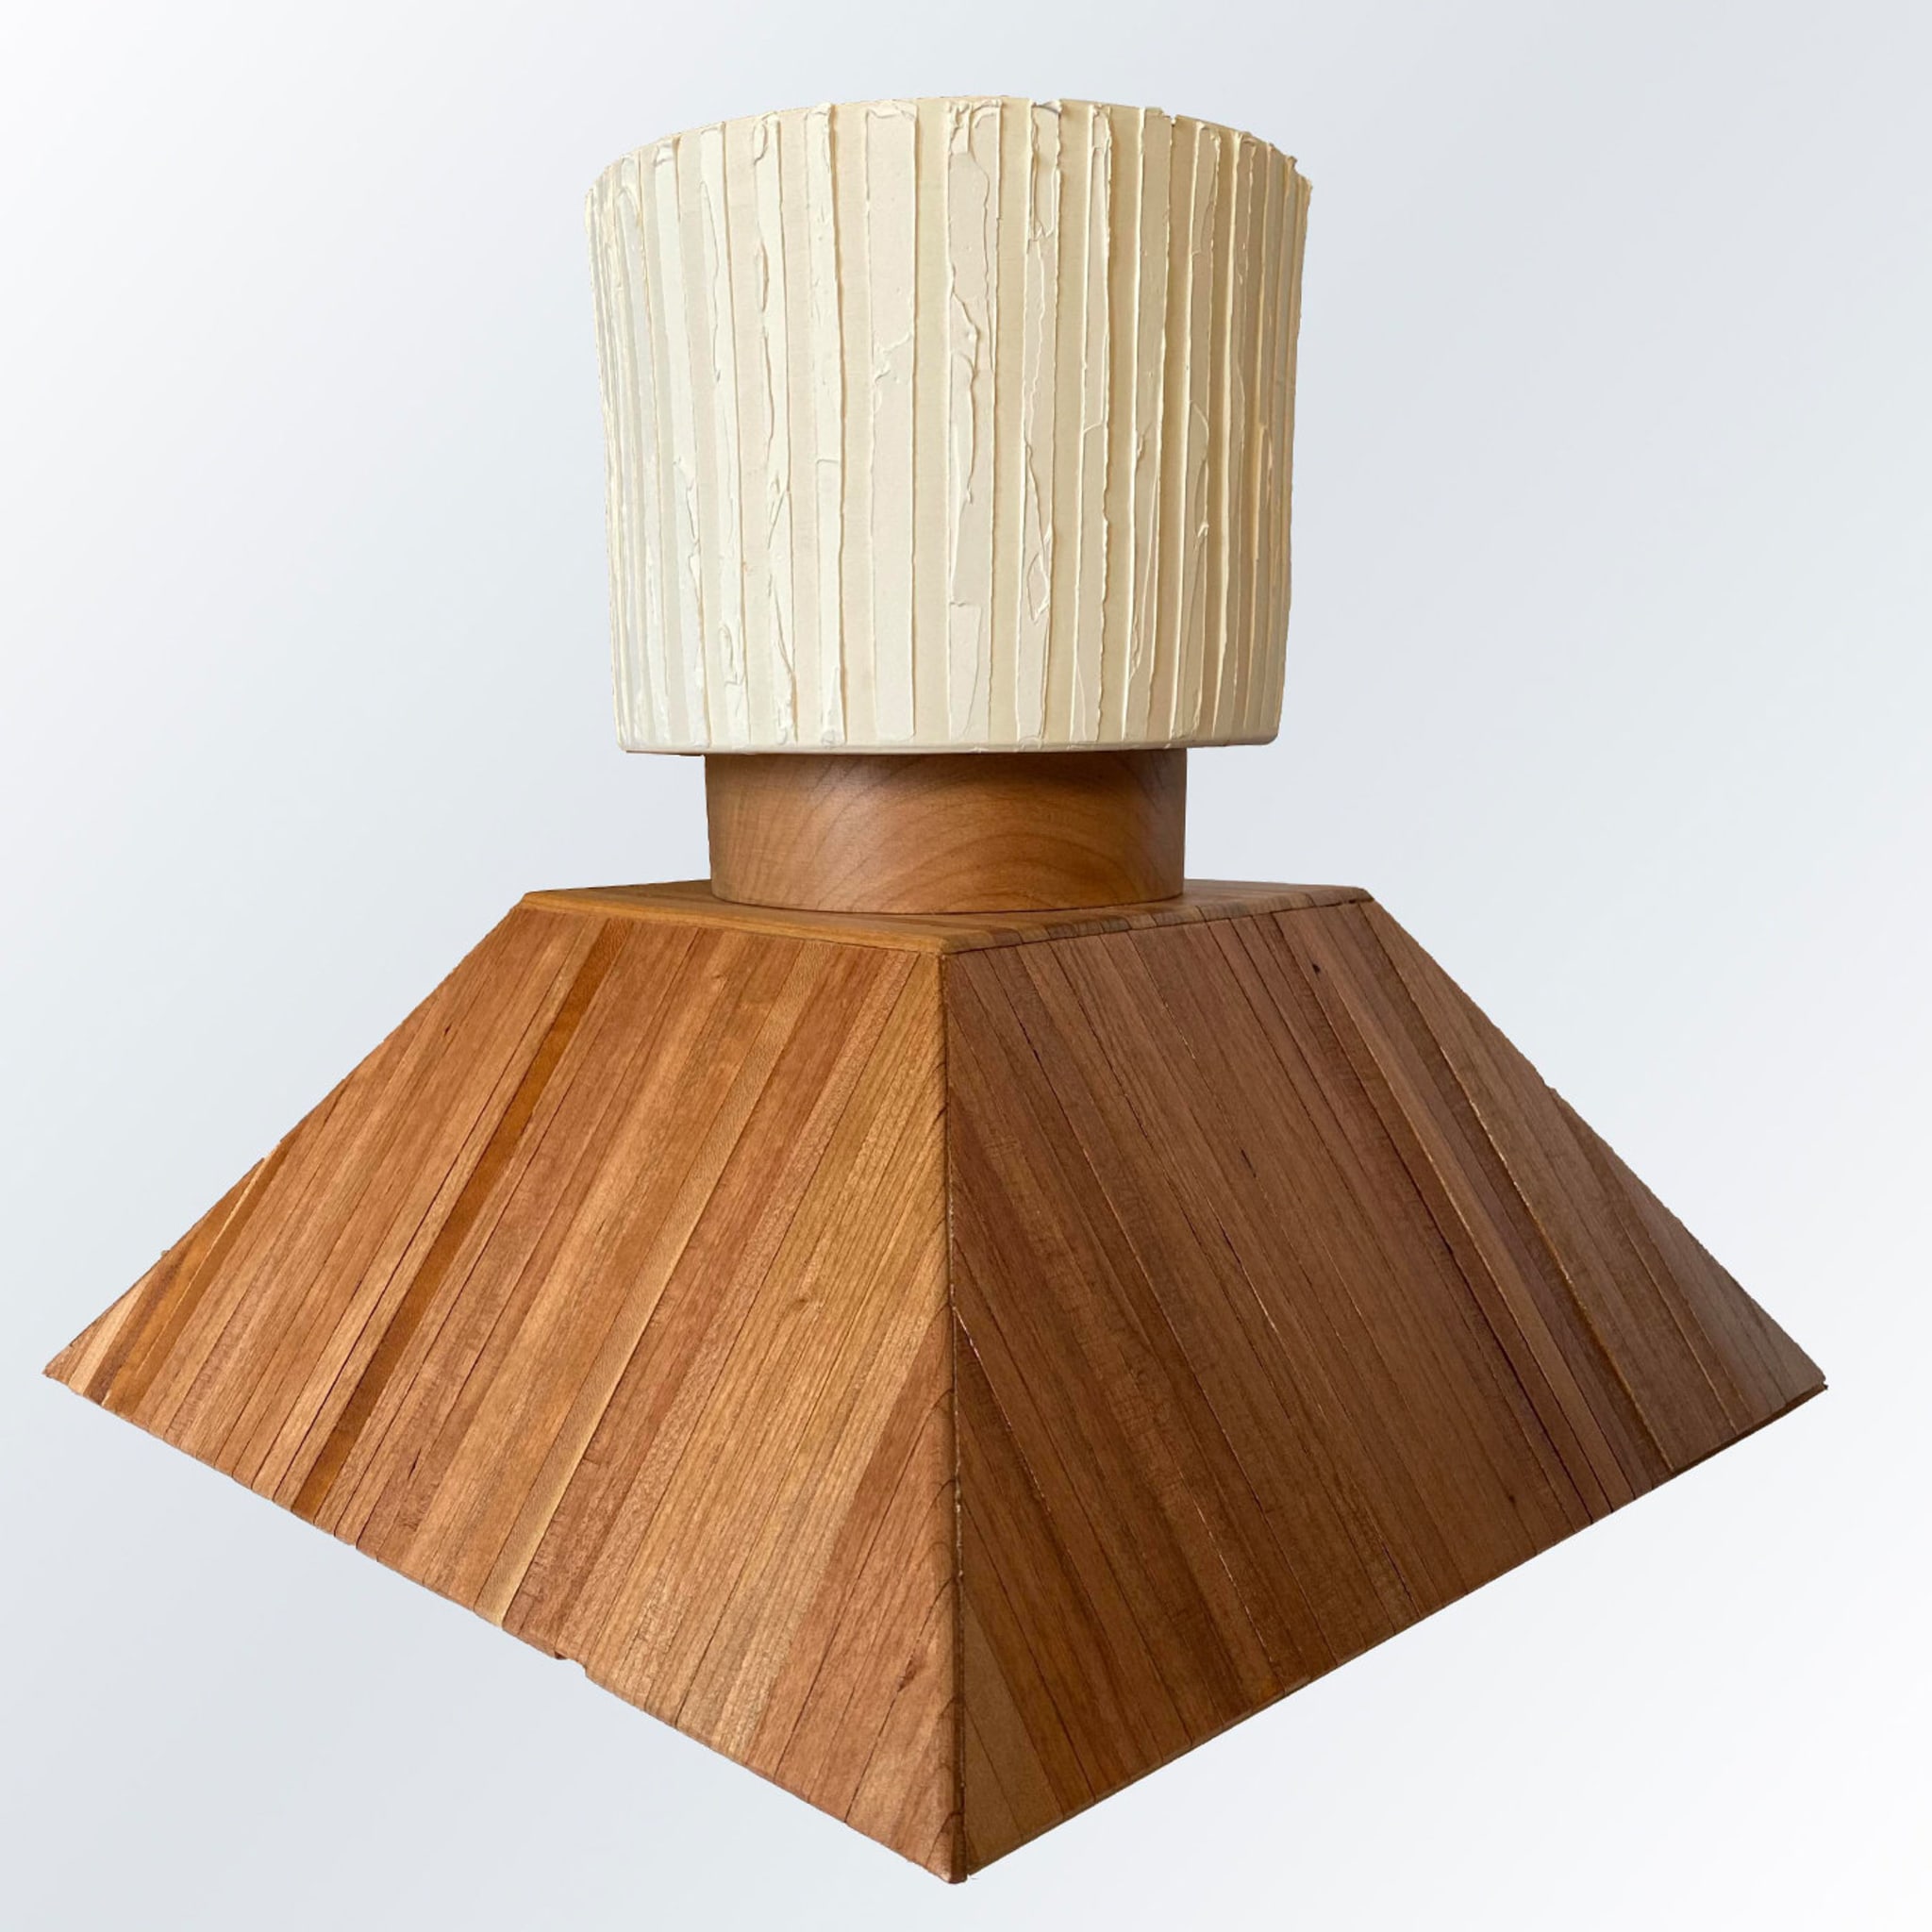 Totem Table Lamp by Mascia Meccani #7 - Alternative view 1